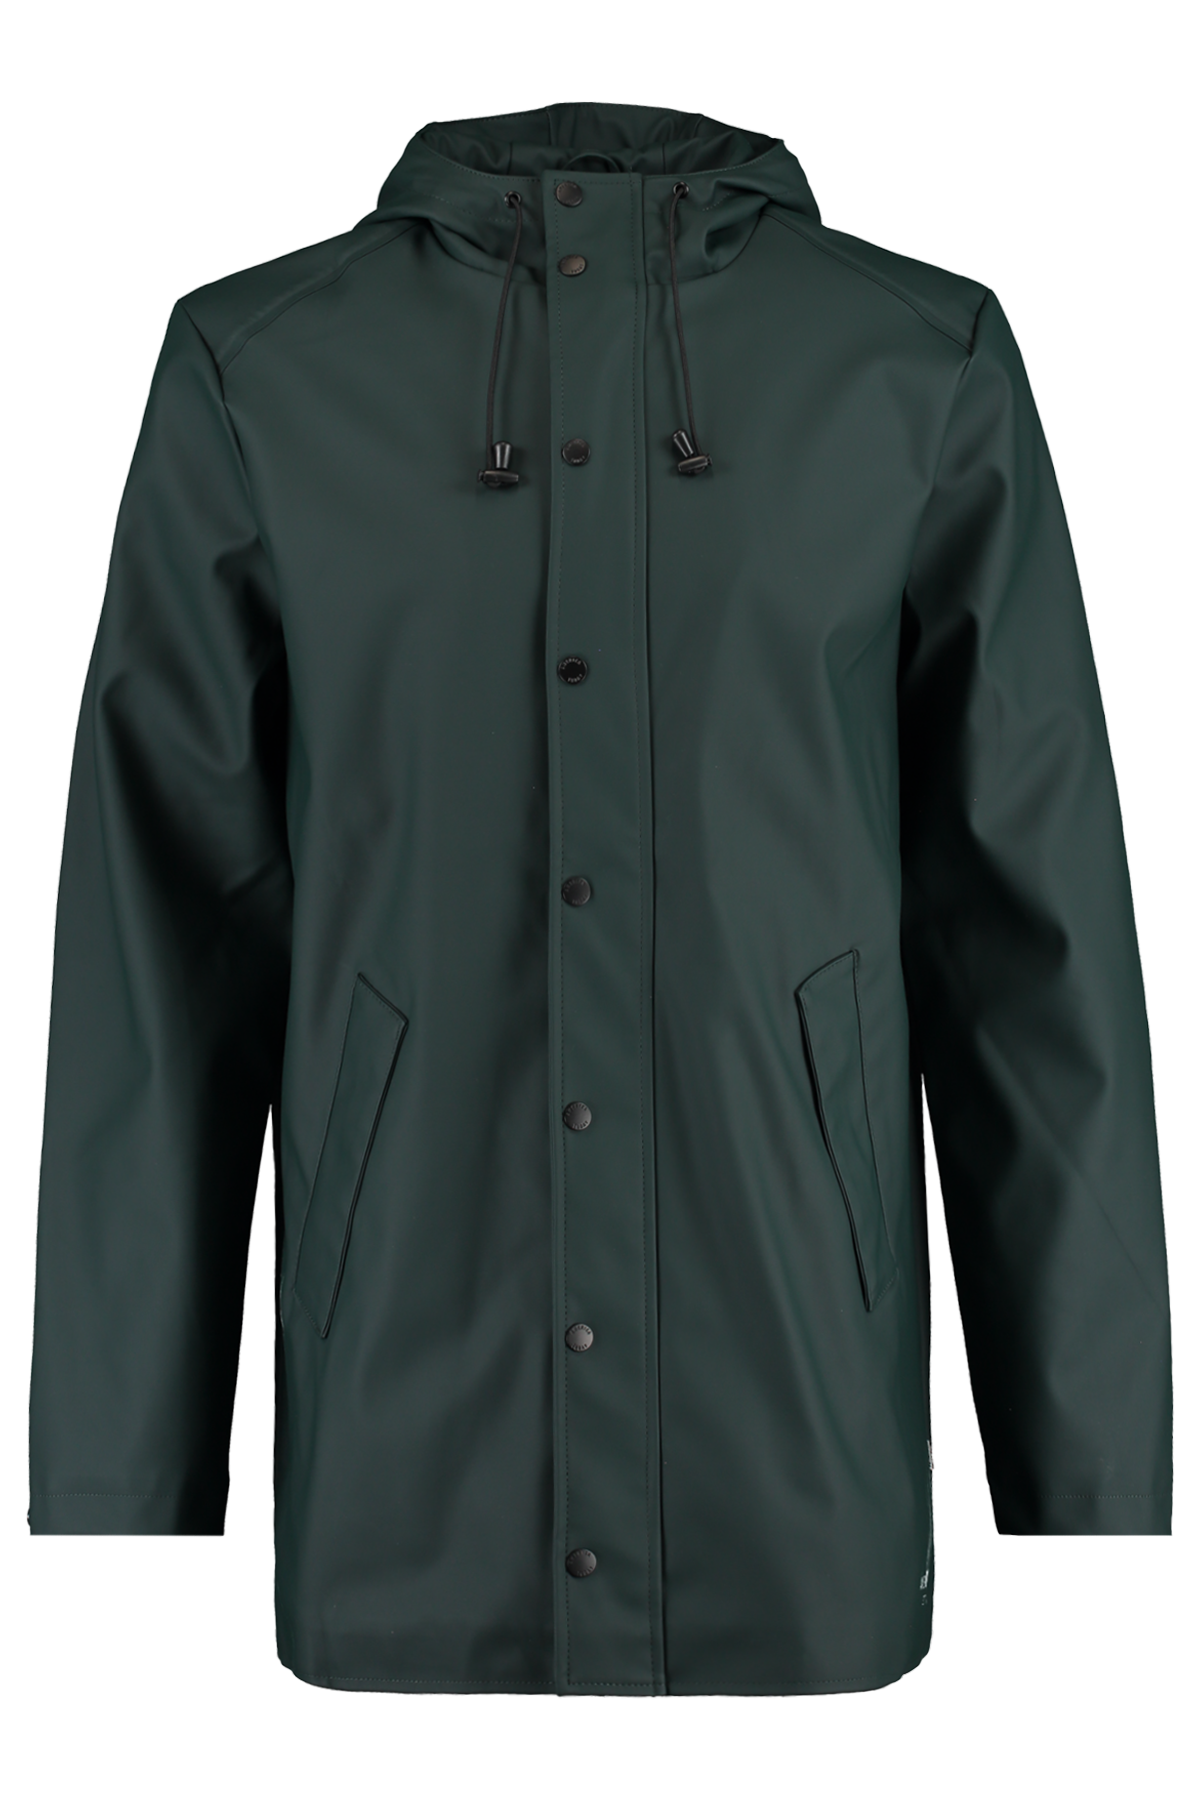 Men Raincoat men medium length Green Buy Online